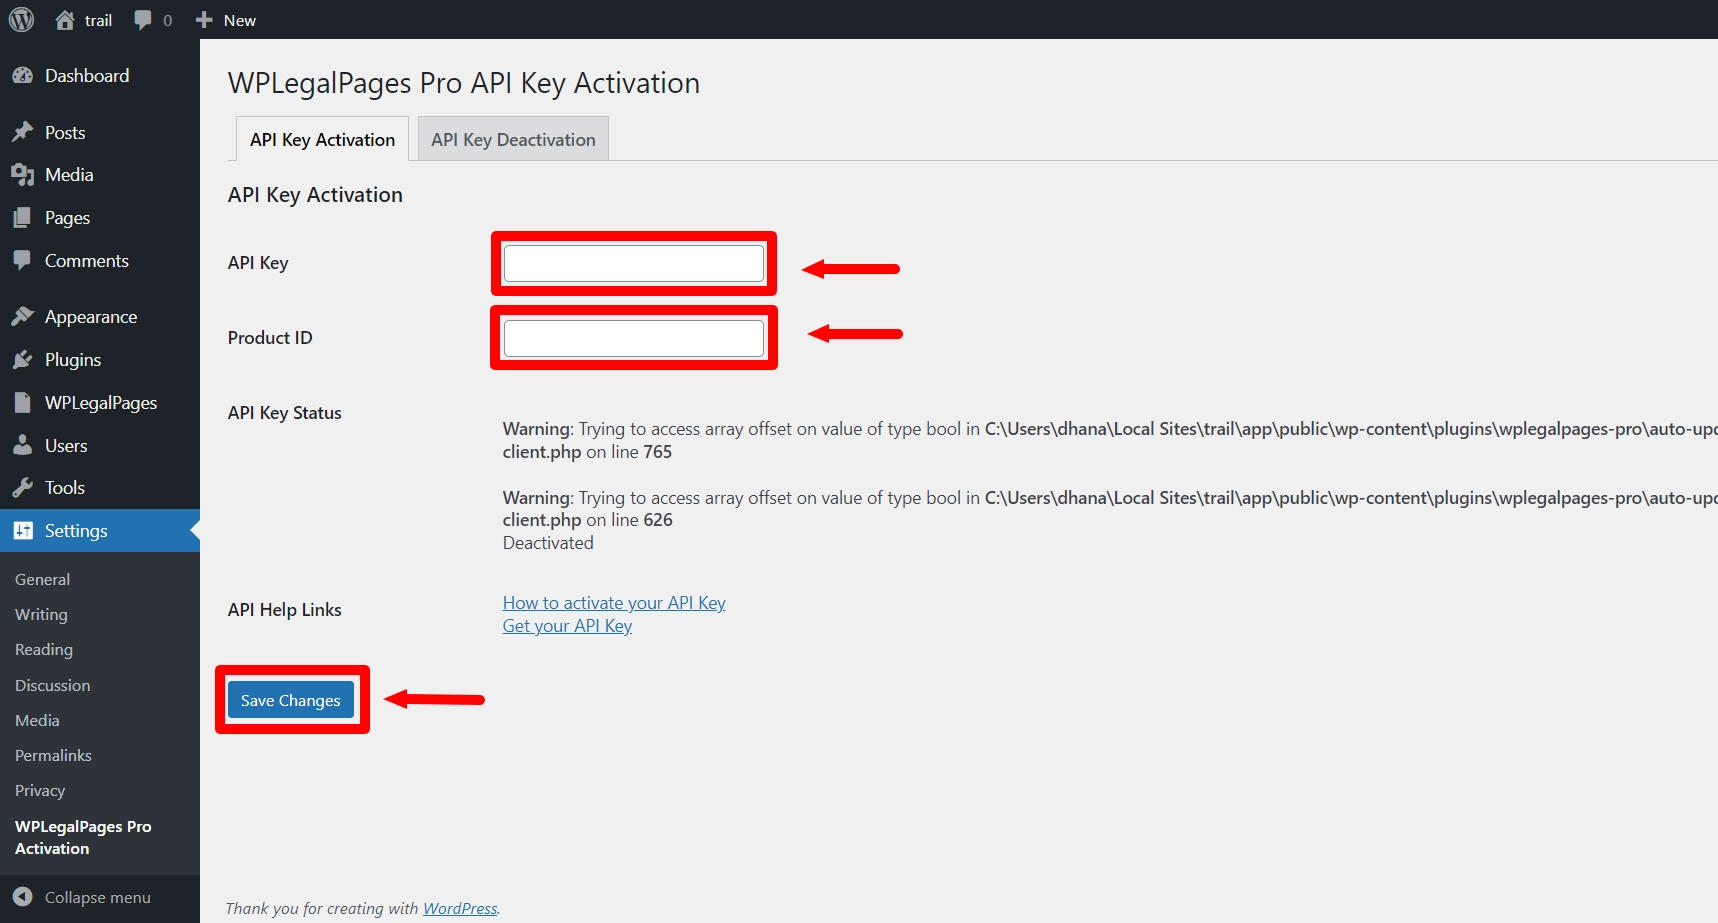 Uploading the API key and the product ID